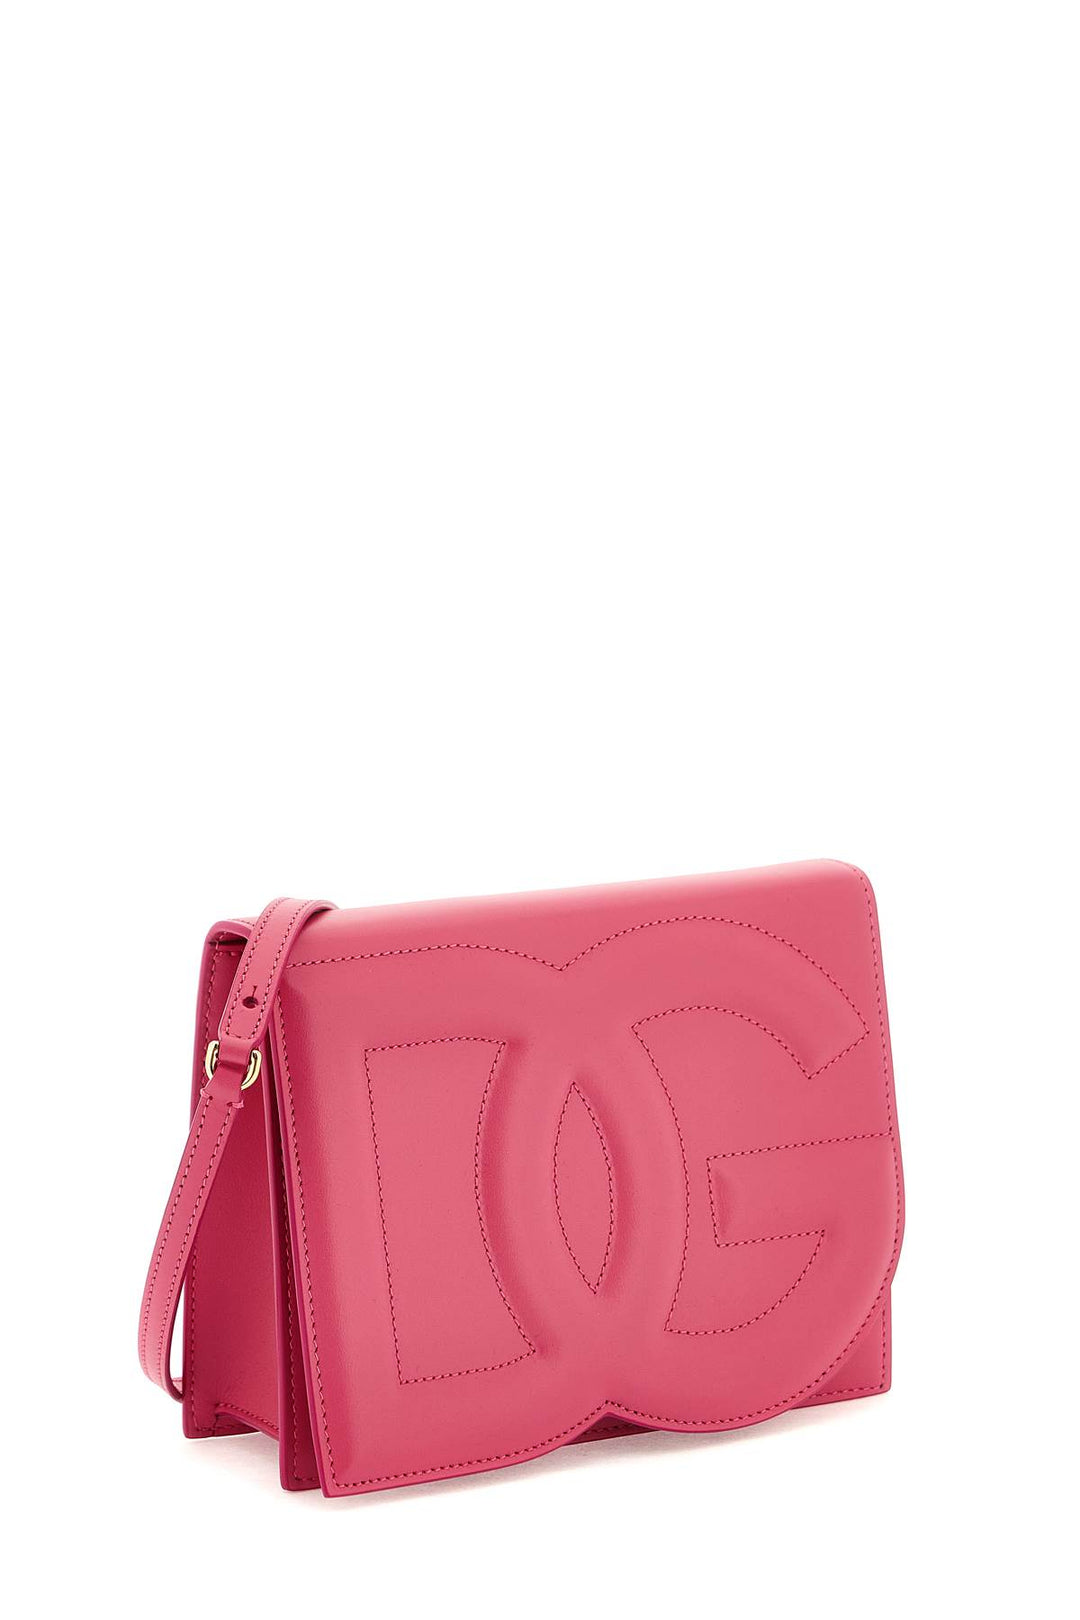 Dolce & Gabbana Leather Crossbody Bag   Fuxia